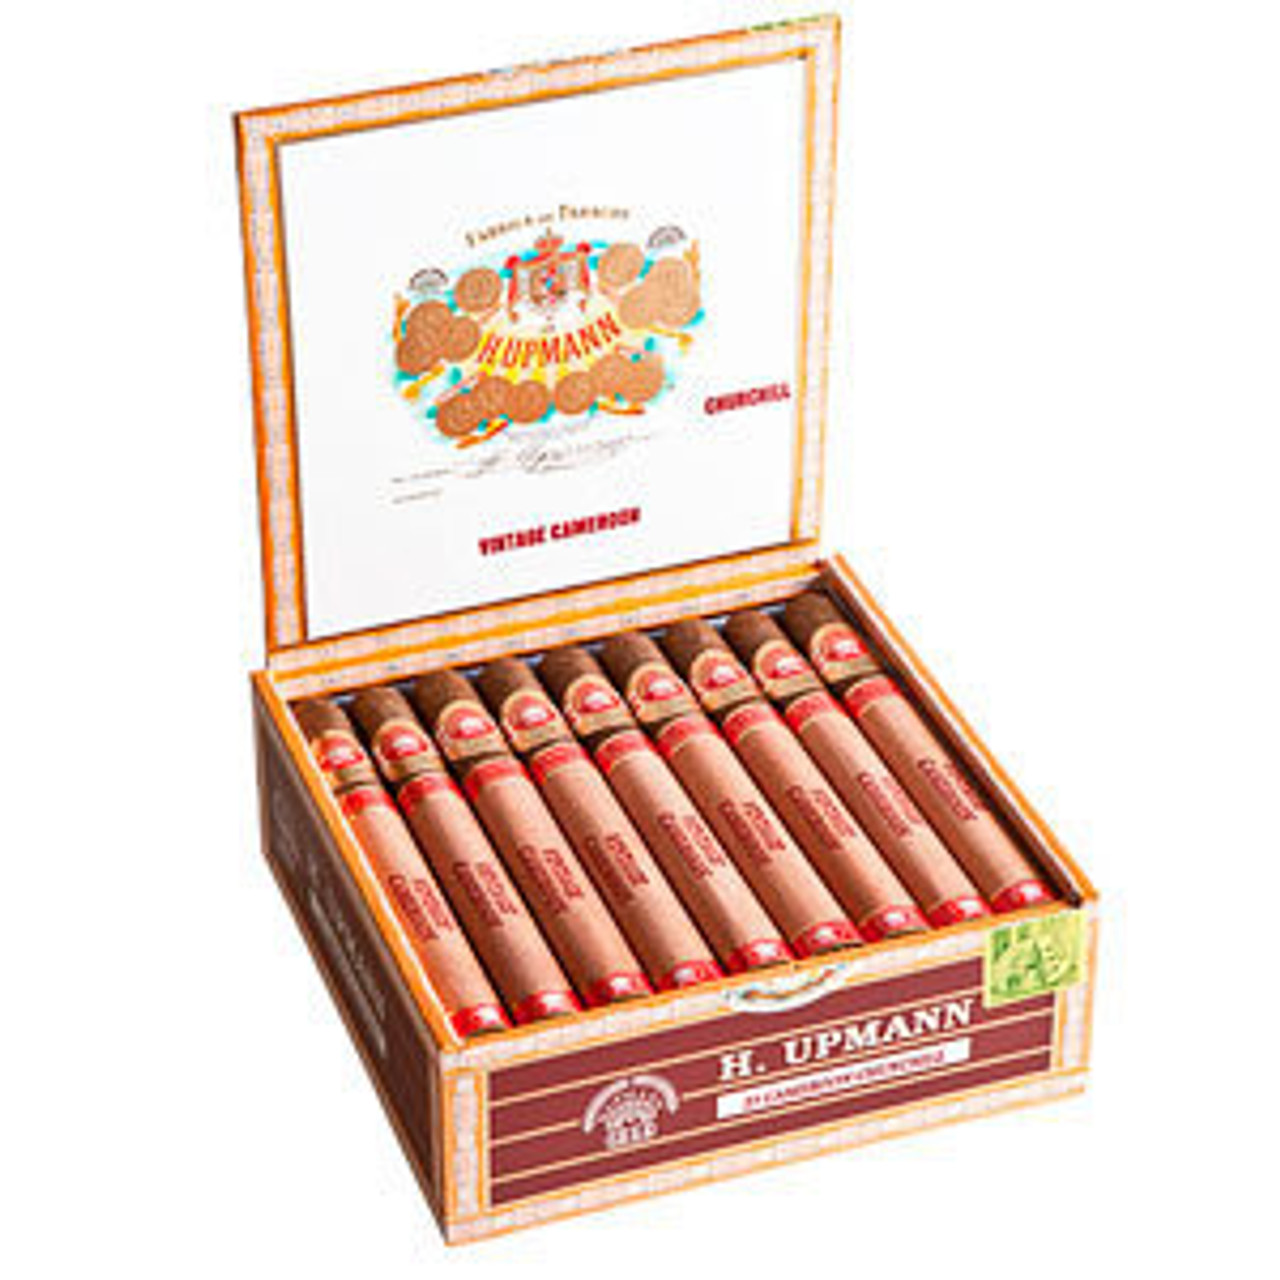 H. Upmann Vintage Cameroon Corona Cigars - 5.5 x 44 (Box of 25) *Box